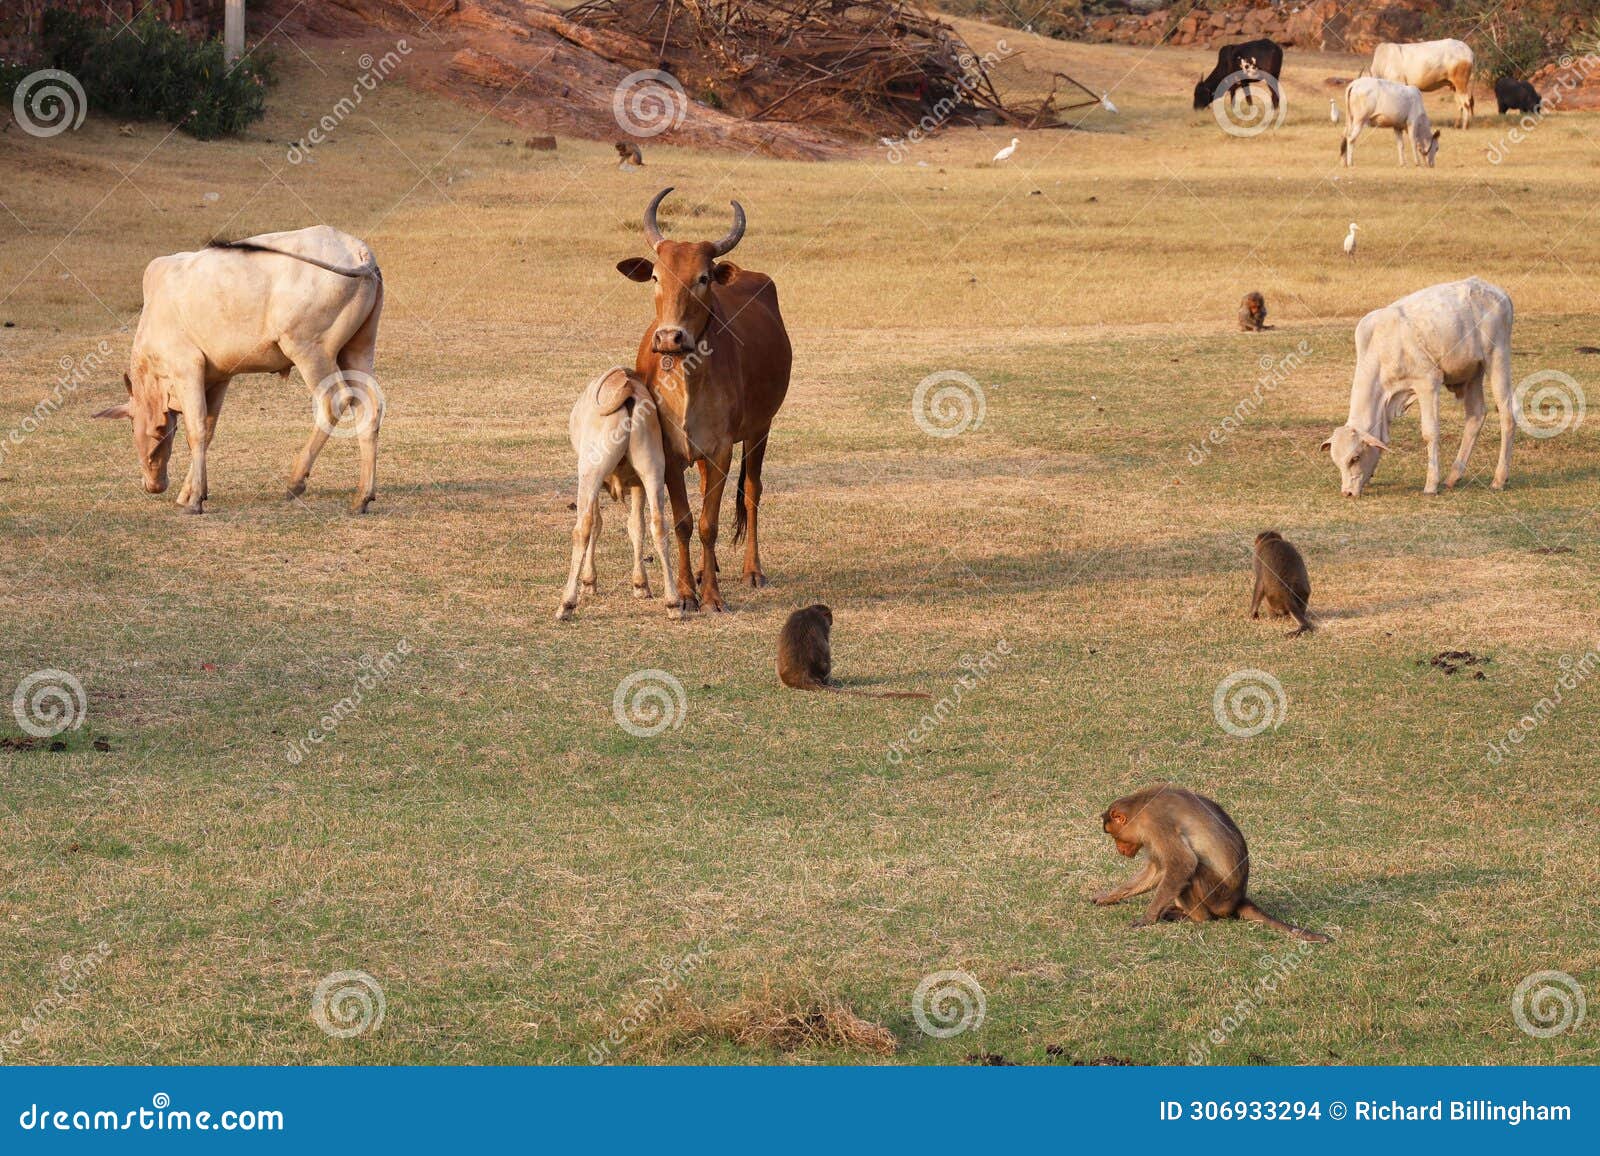 cattle and macaque monkey, badami, bagalkot, karnataka, india